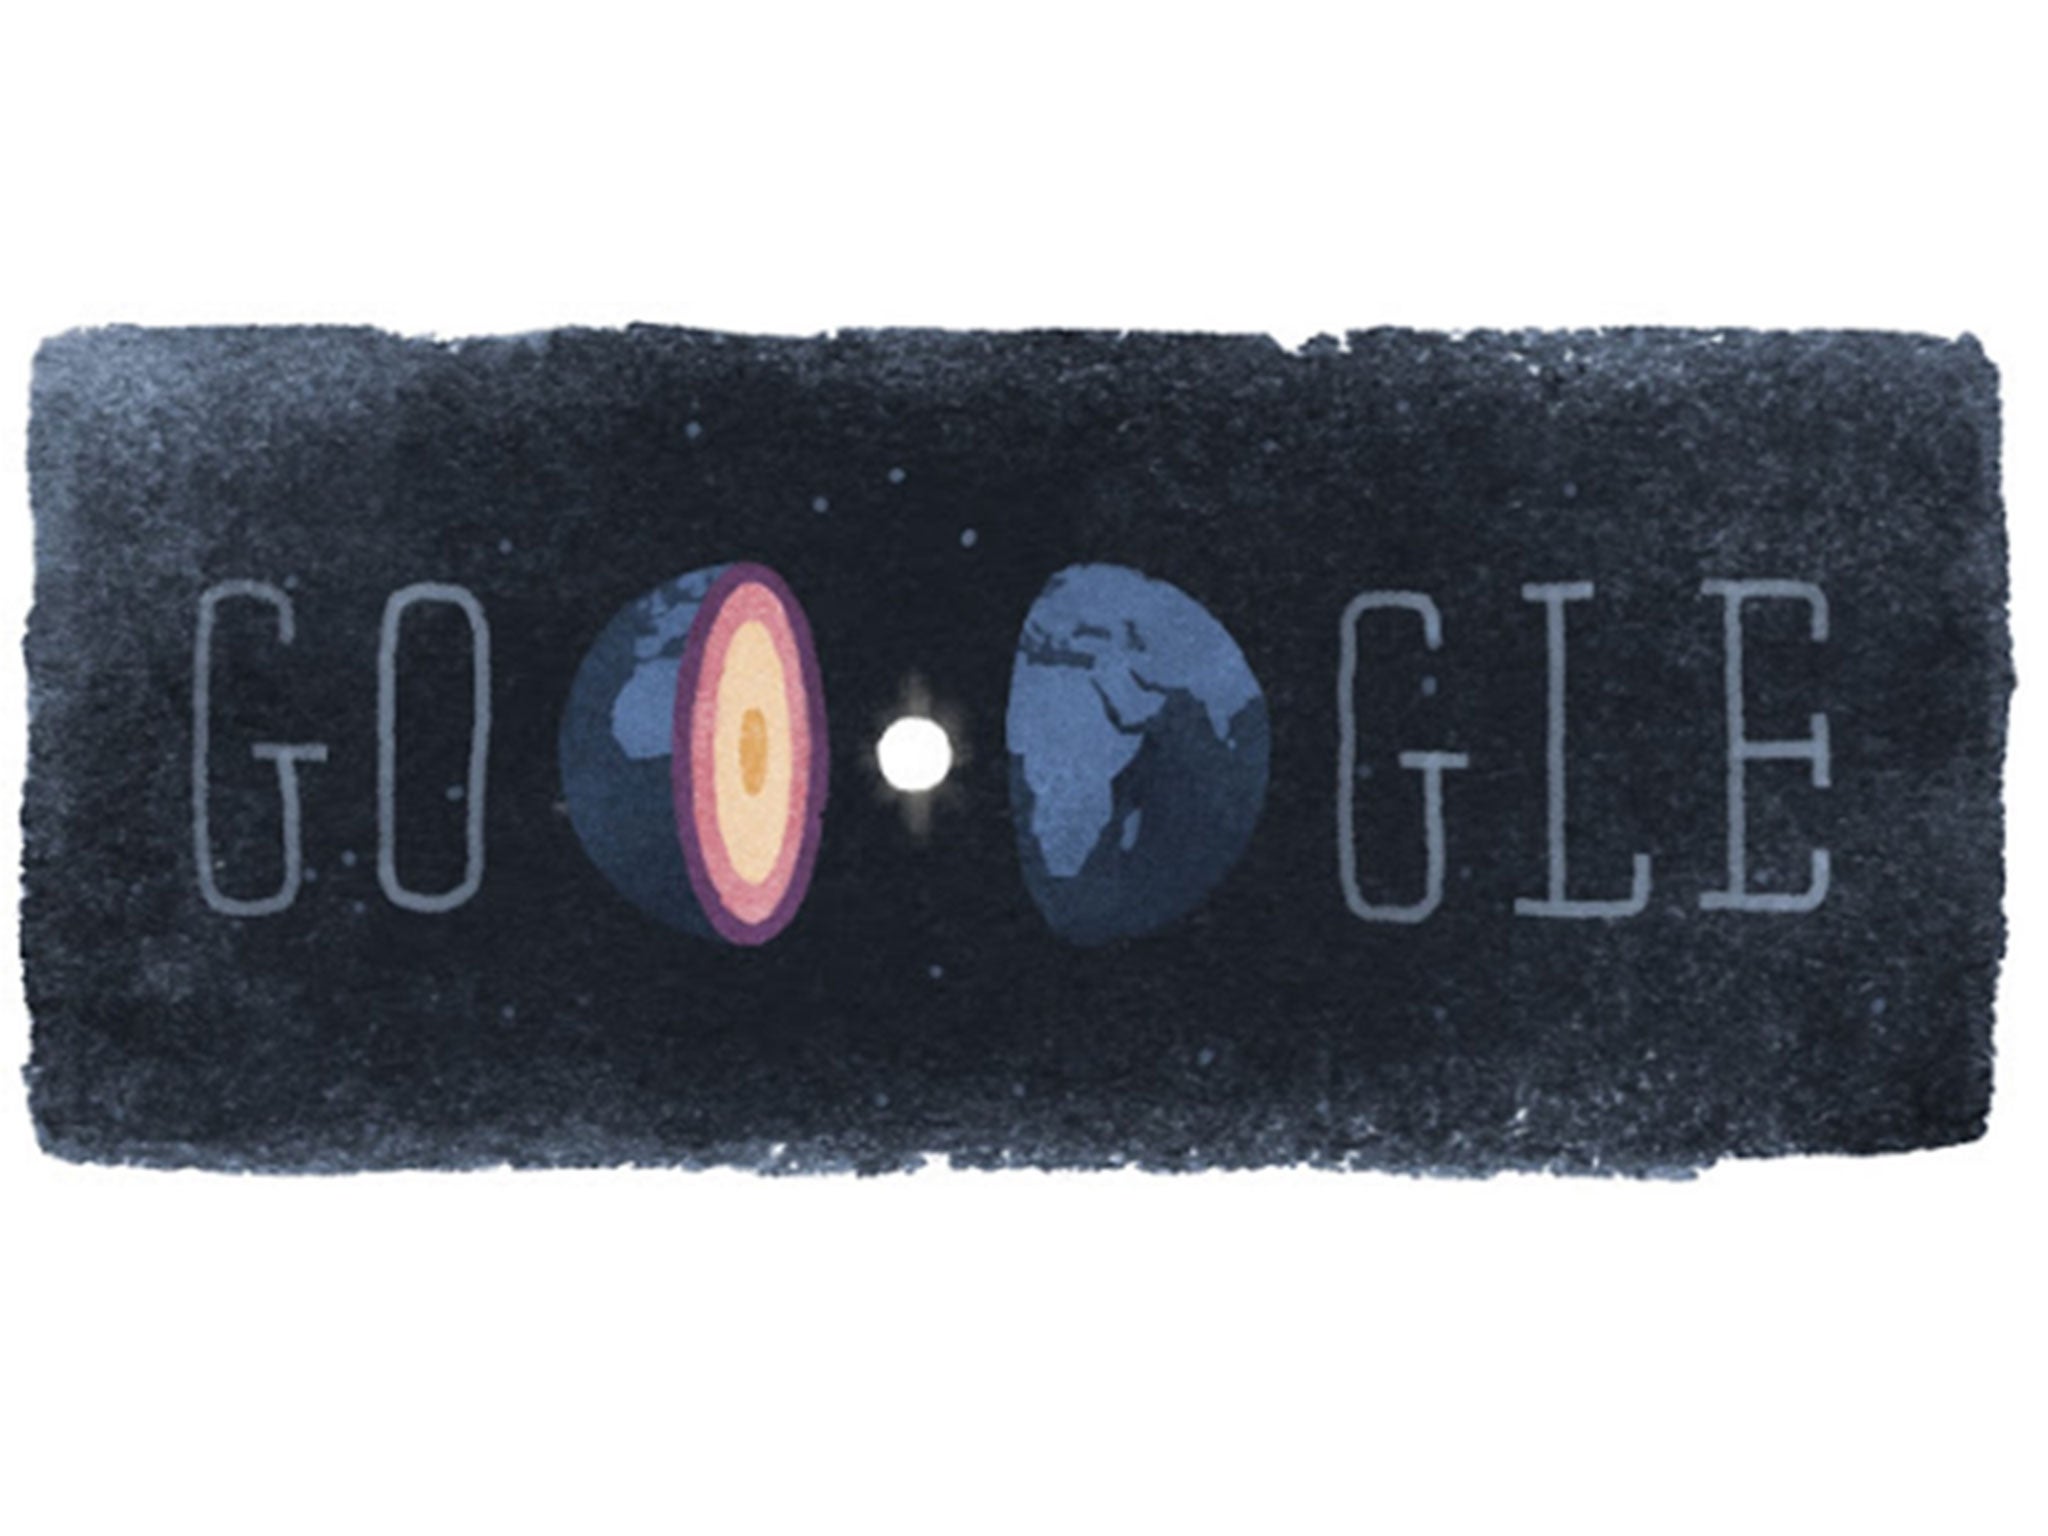 A Google Doodle celebrating the 127th birthday of Inge Lehmann